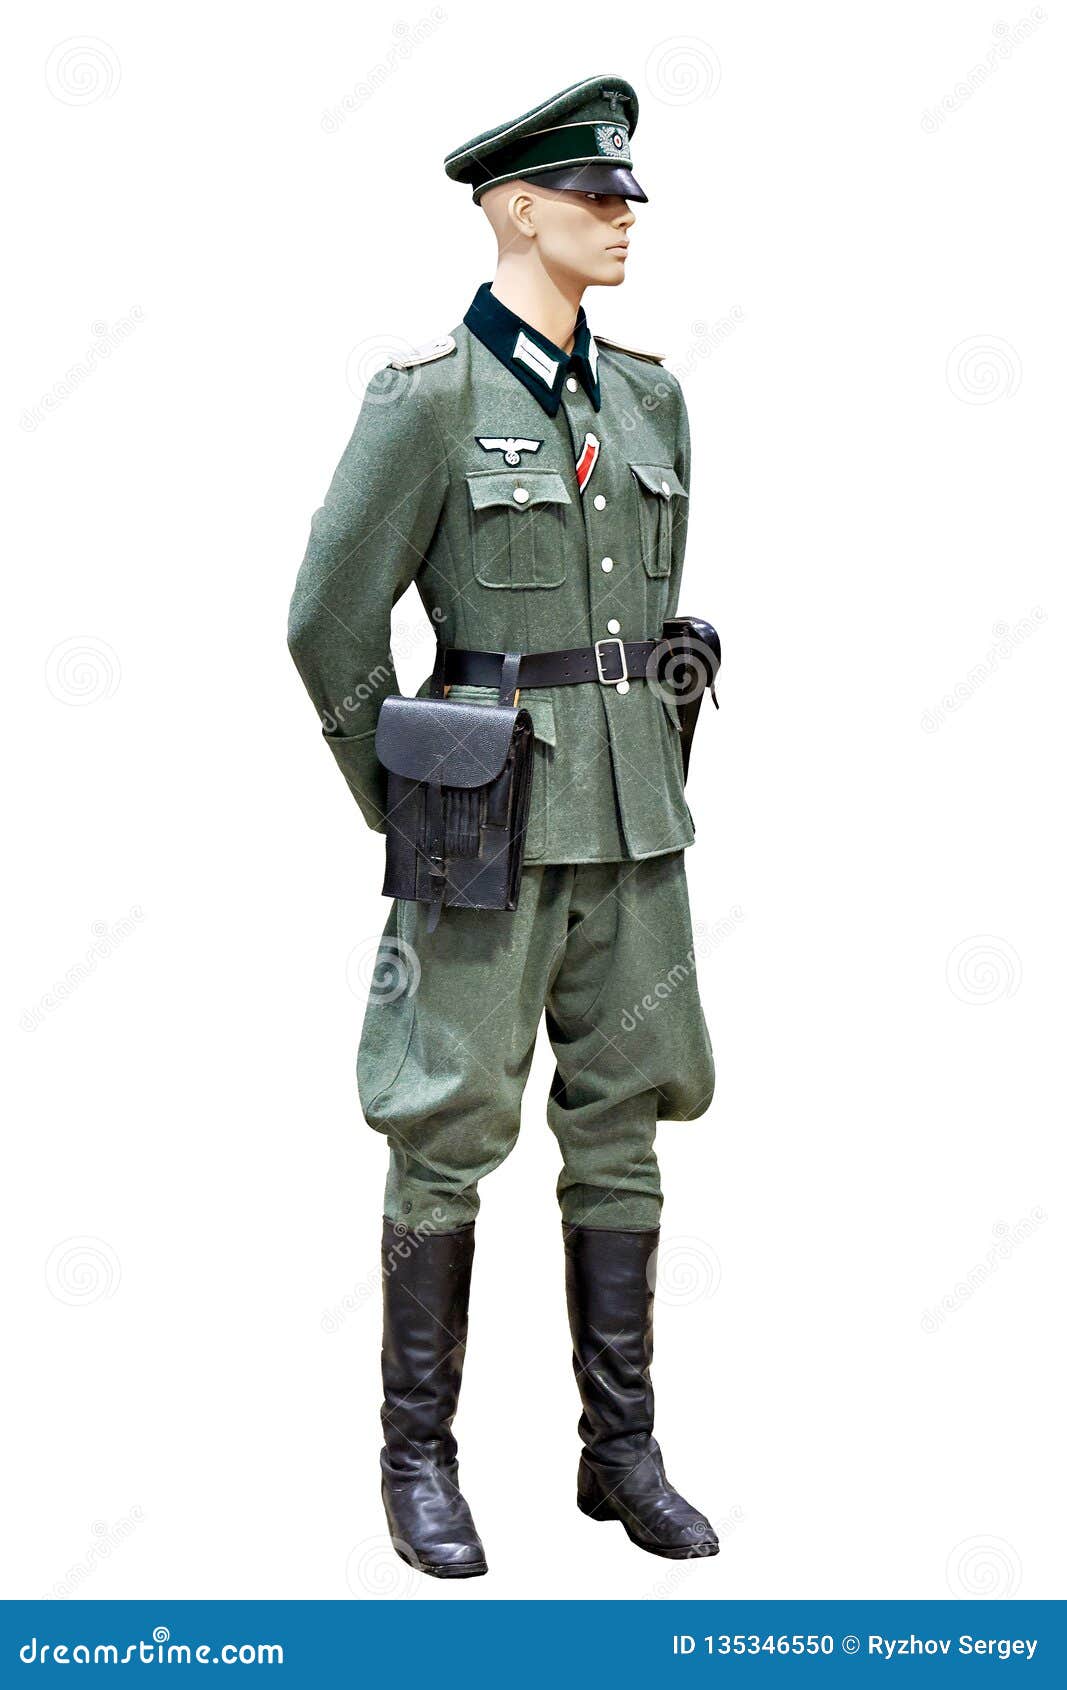 Total 95+ imagen uniformes alemanes de la segunda guerra mundial